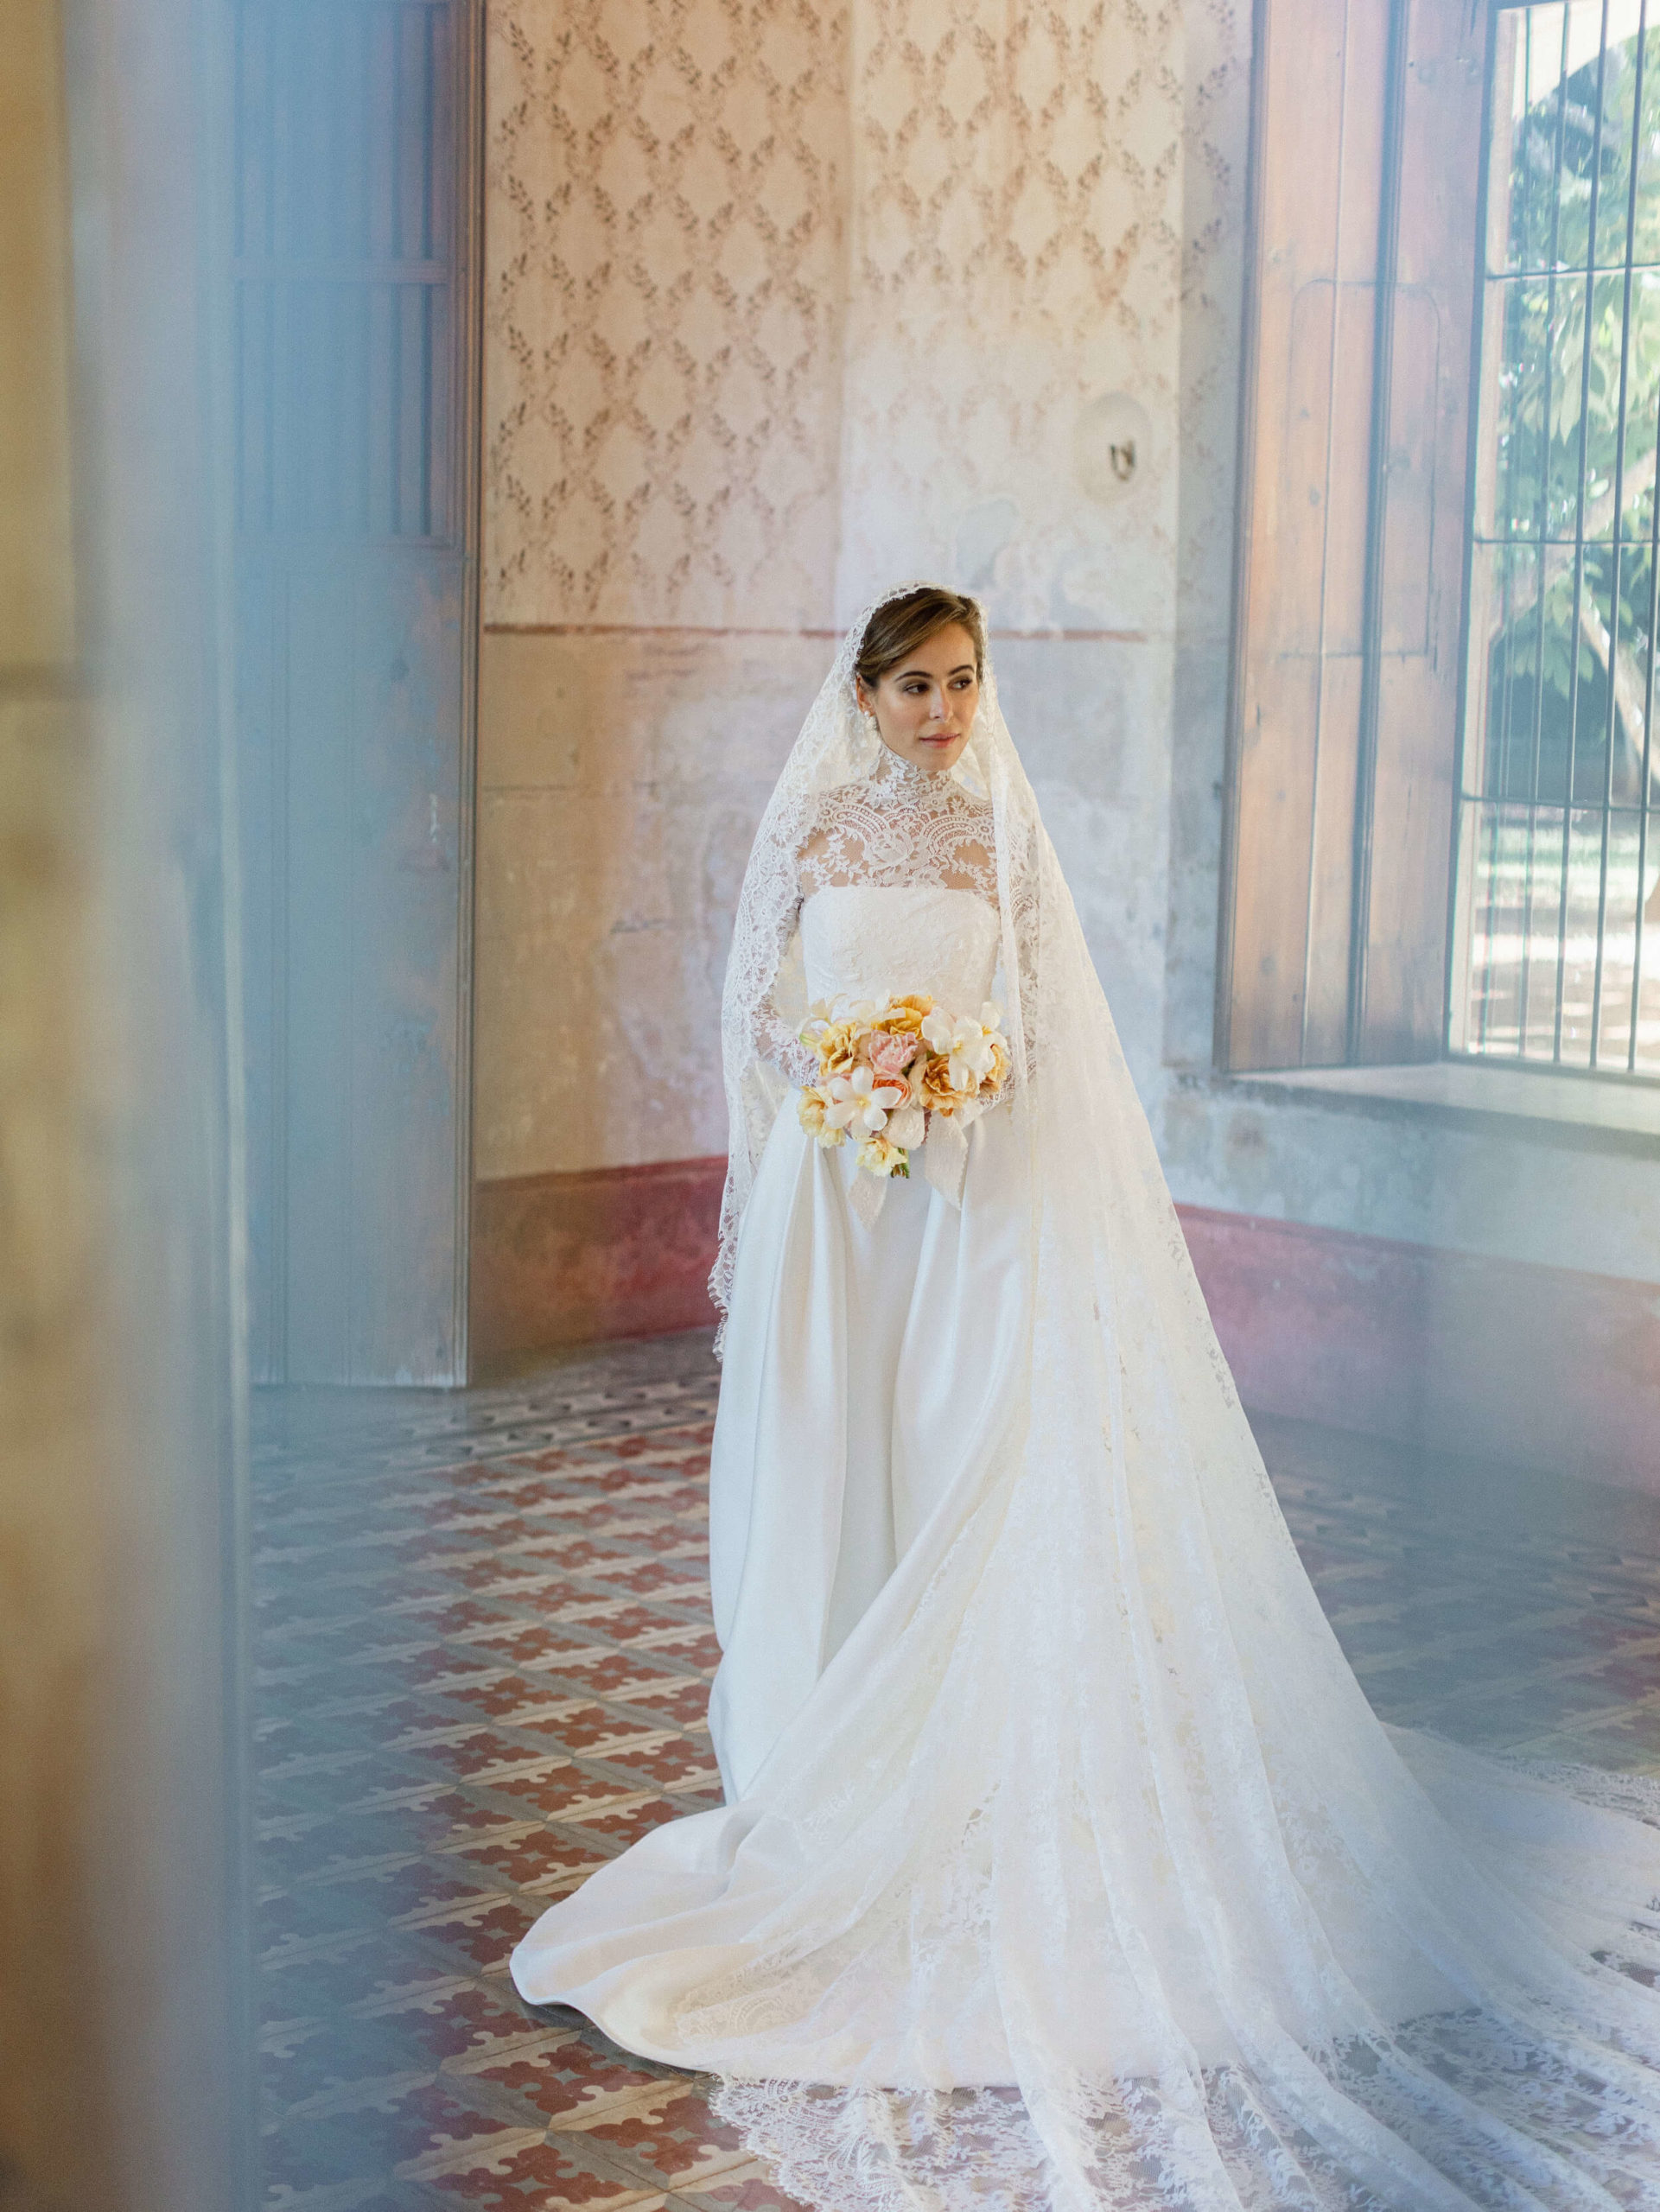 Bride posing in wedding dress